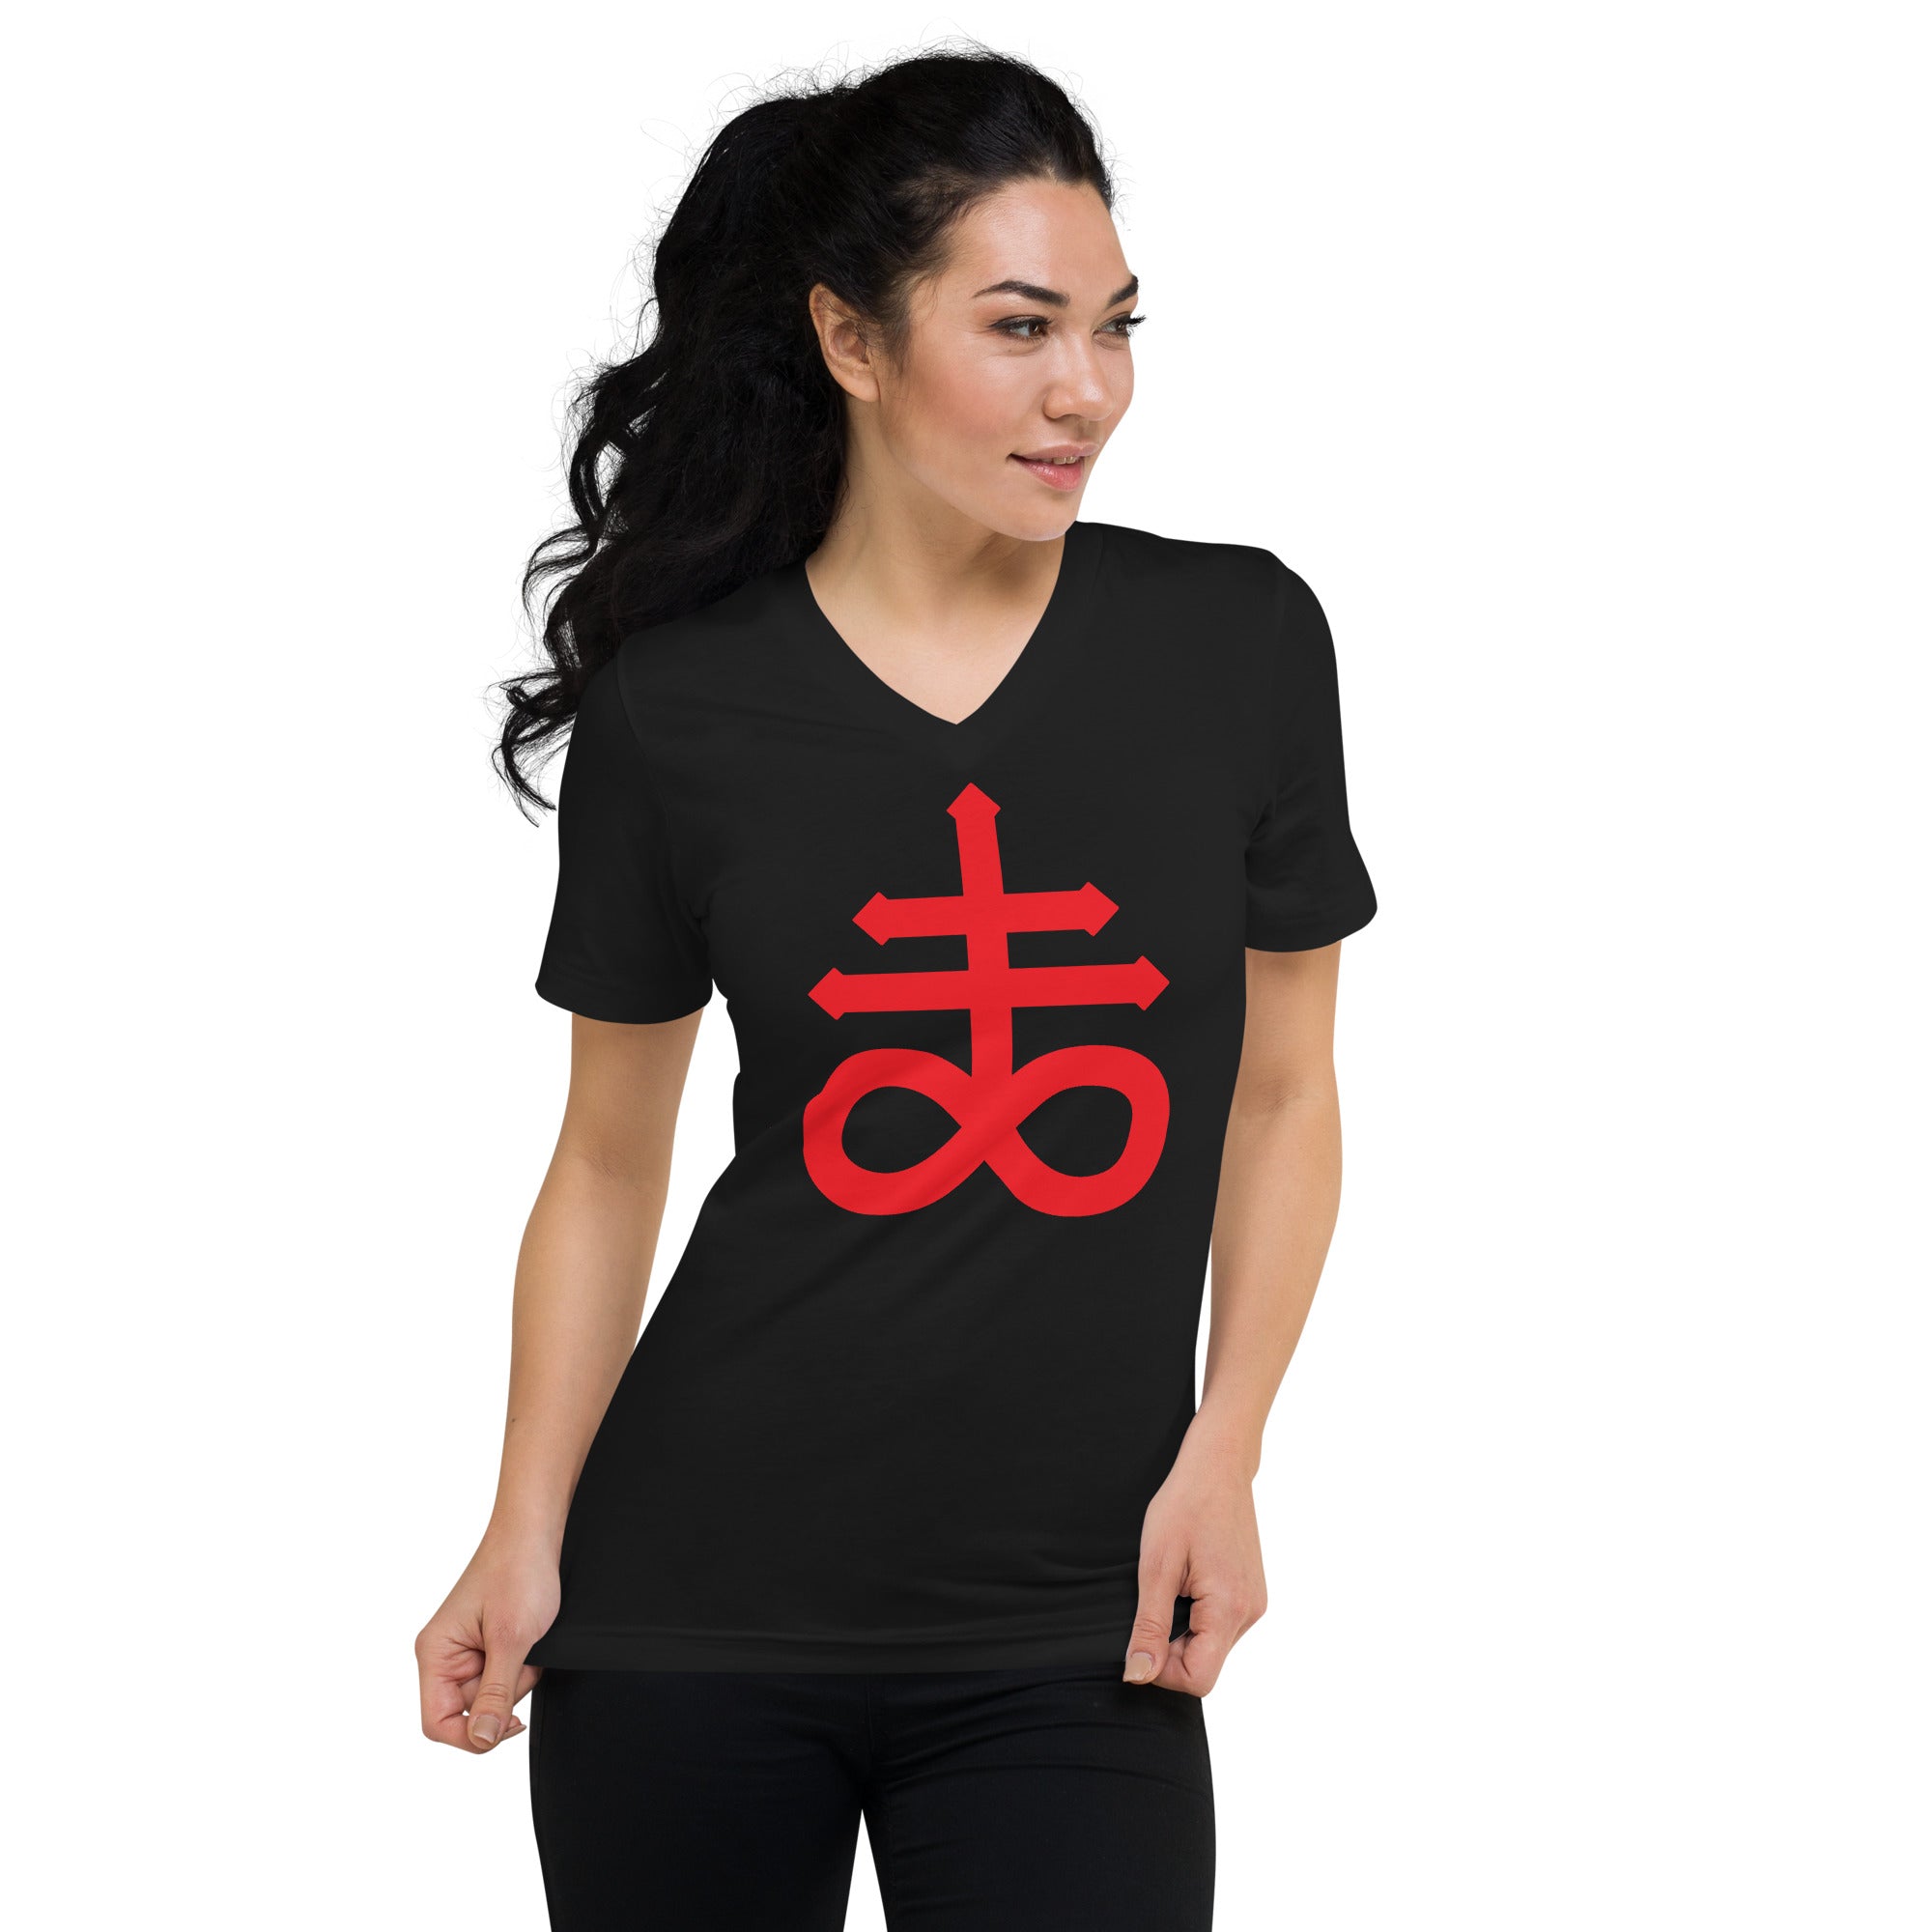 The Leviathan Cross of Satan Occult Symbol Women’s Short Sleeve V-Neck T-Shirt Red Print - Edge of Life Designs